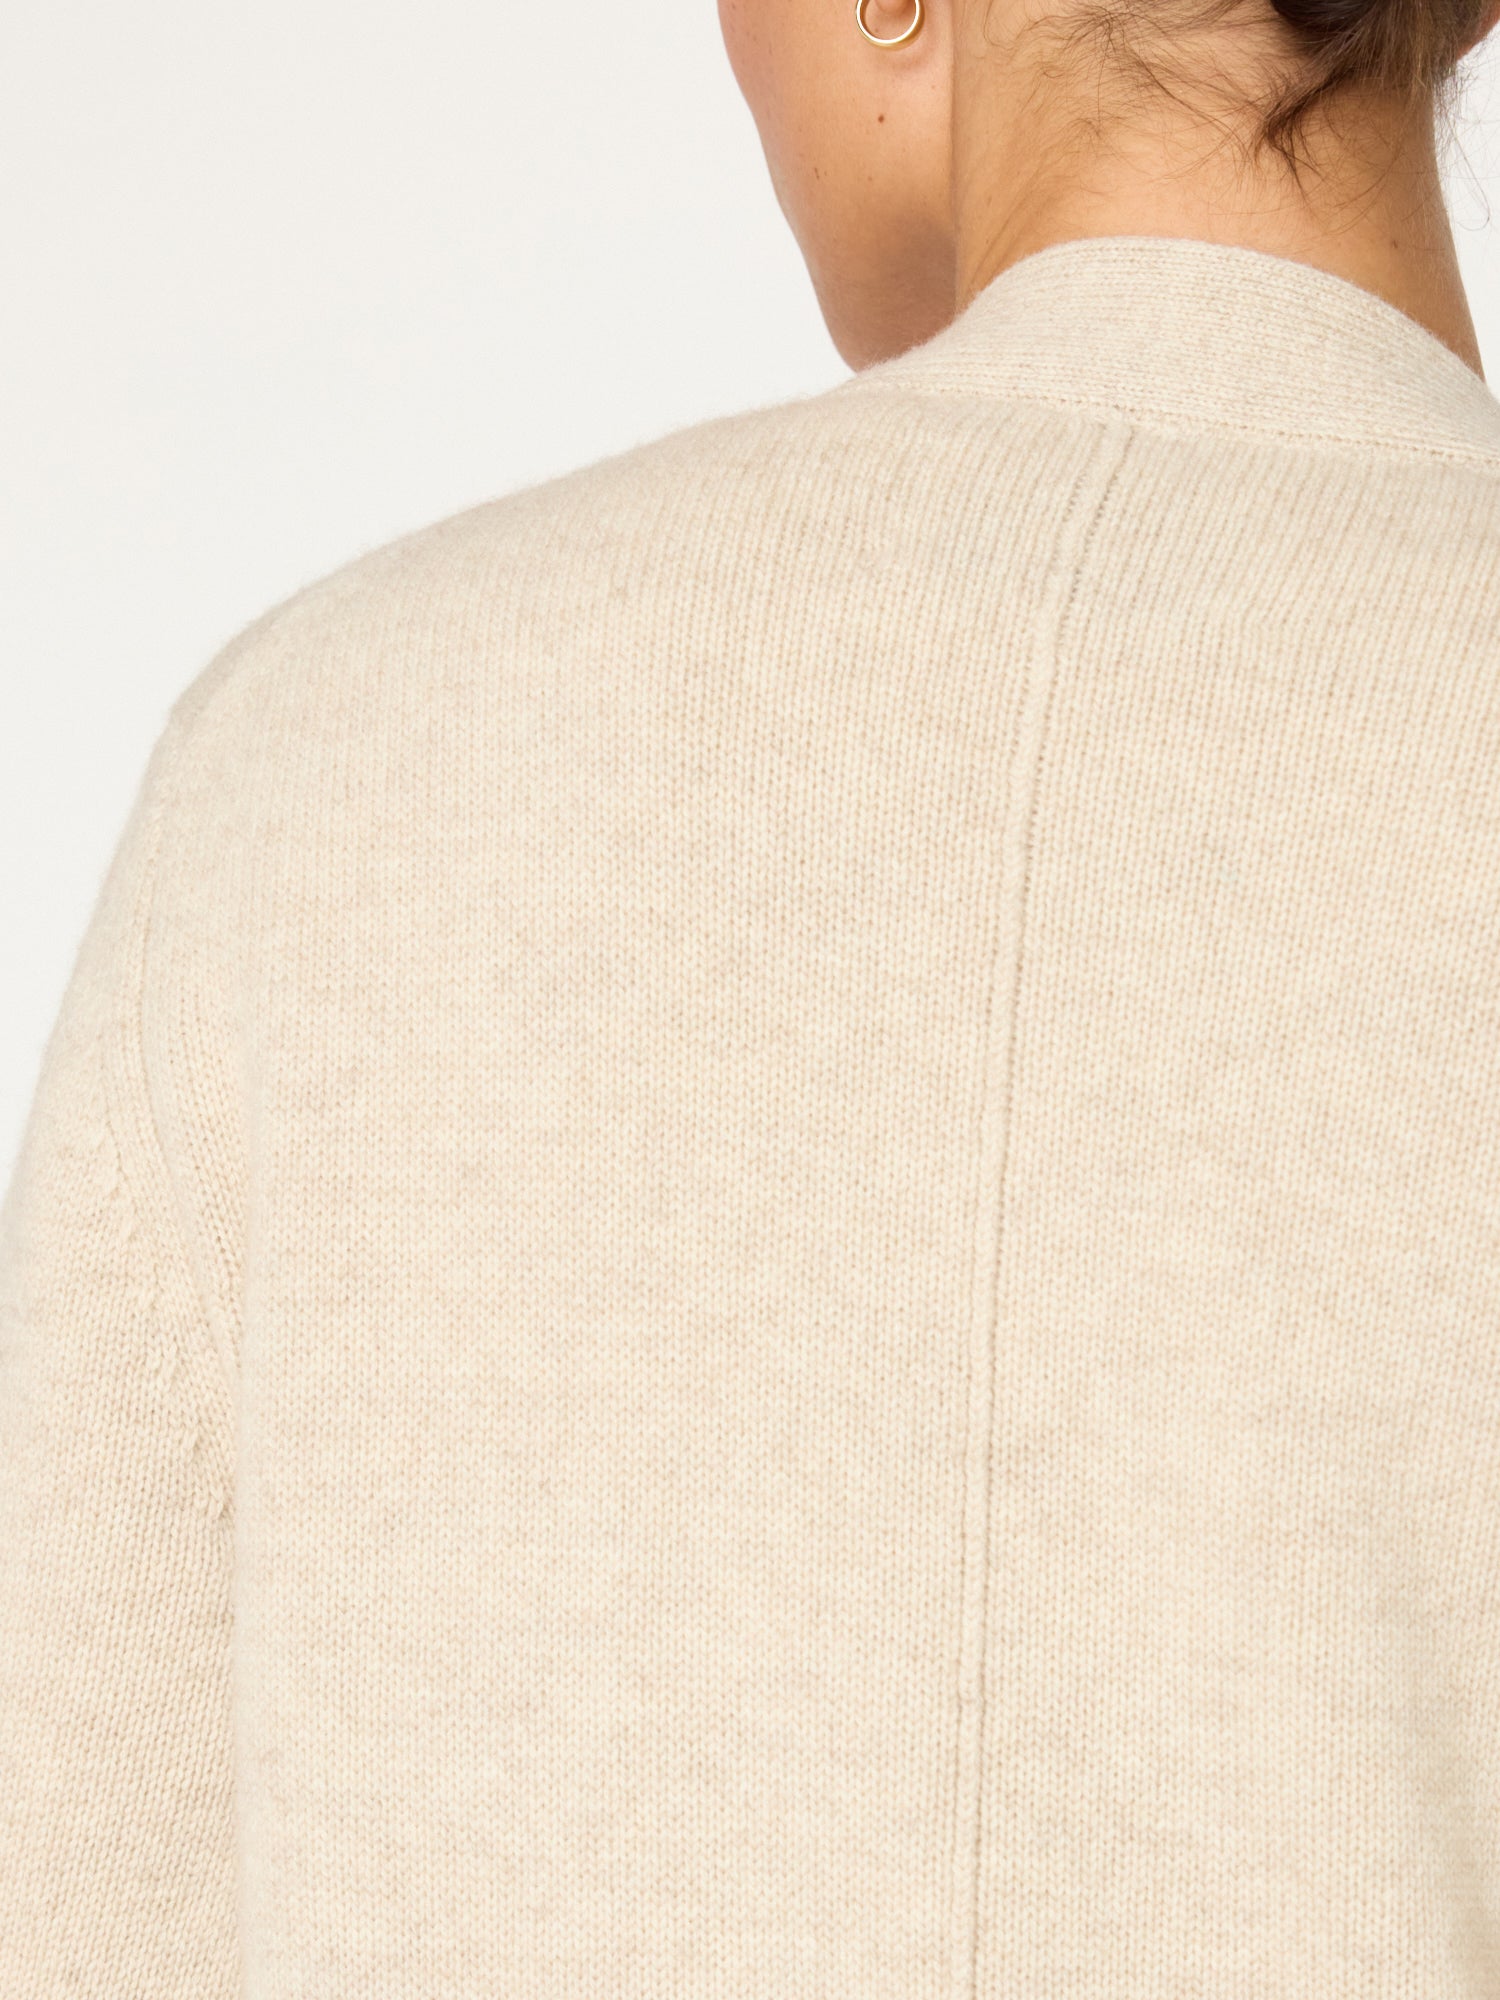 Haim beige duster cardigan sweater close up